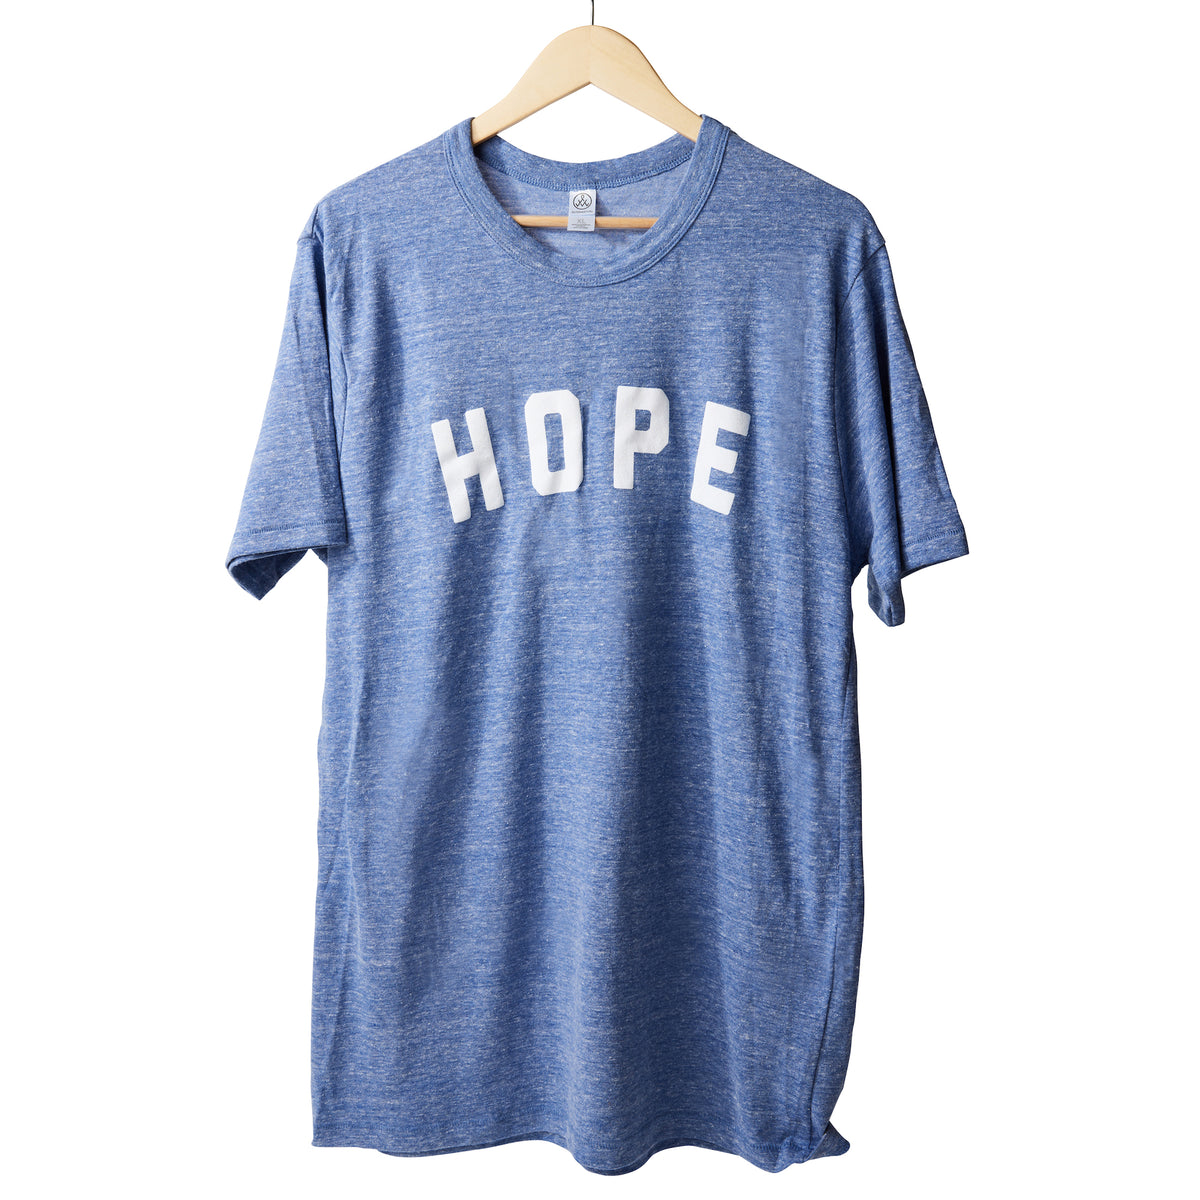 Pacific Blue Hope Shirt